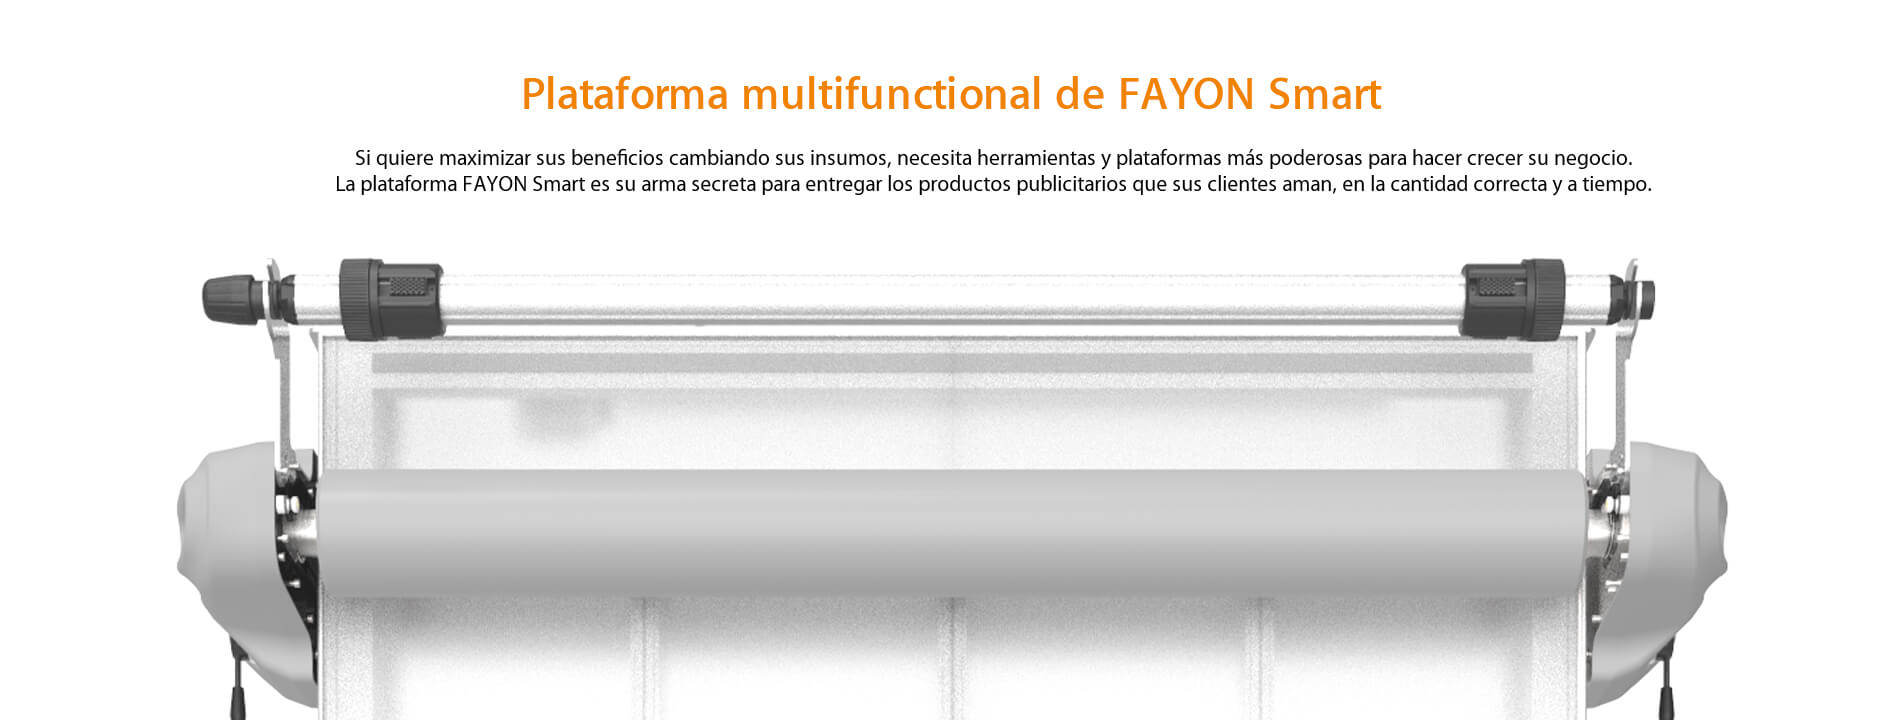 Plataforma multifunctional de FAYON Smart